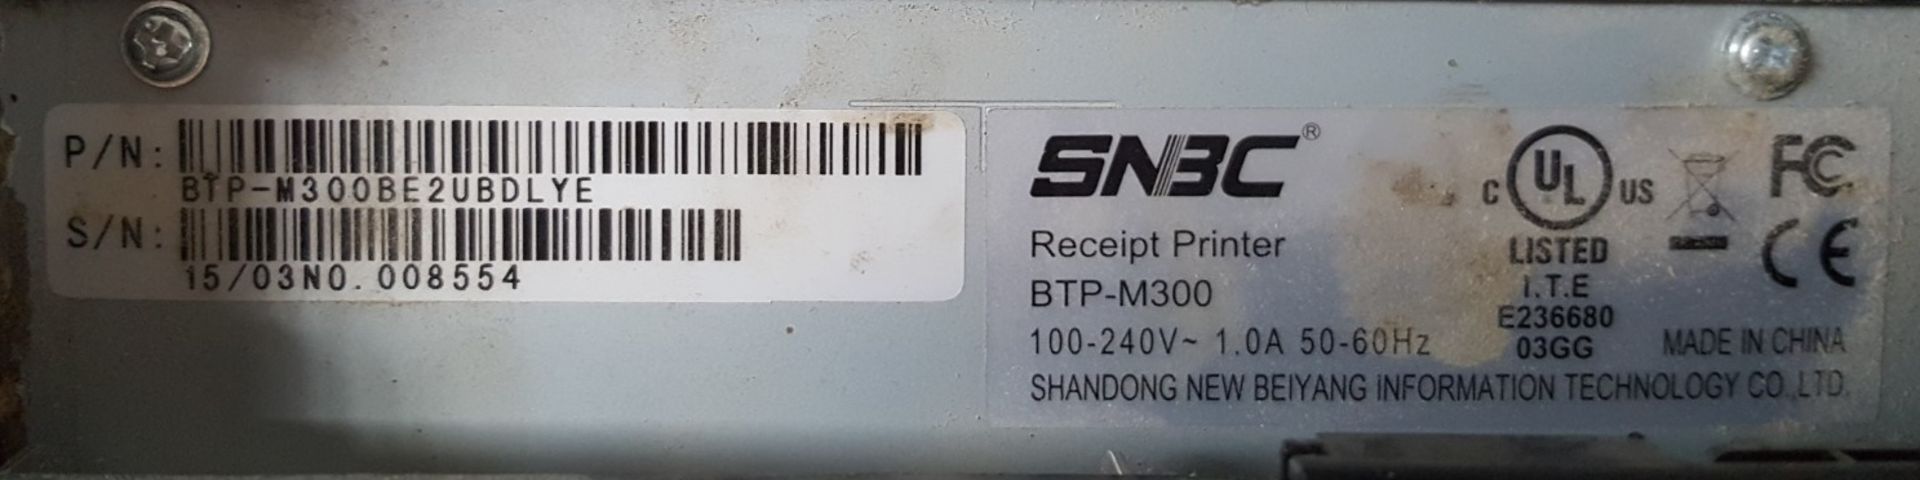 1 x SNBC Ethernet/USB Receipt Printer BTP-M300 Black - Ref BY114 AC3 - Image 2 of 5